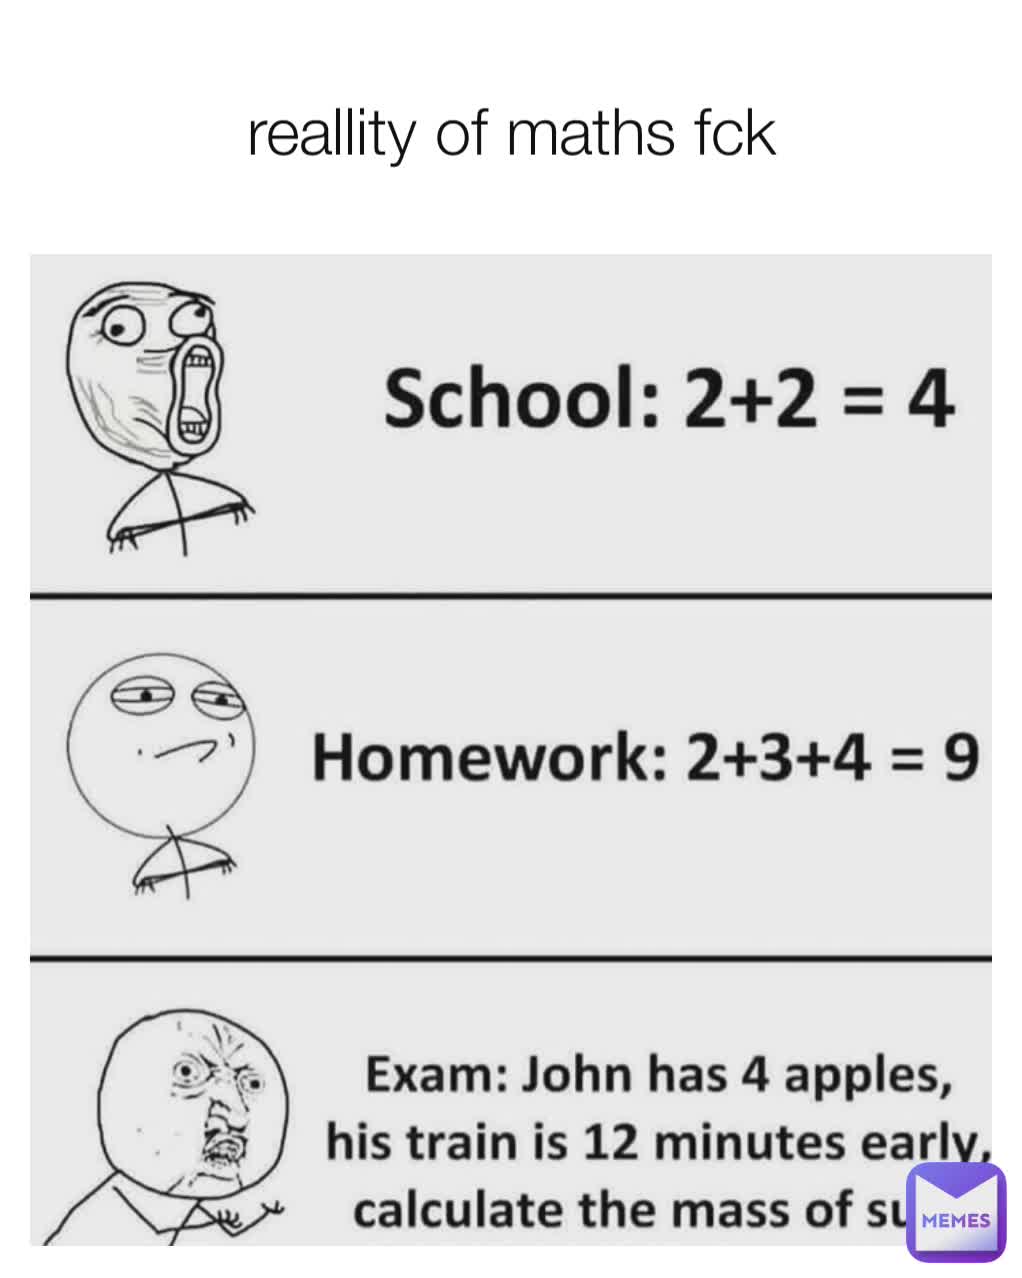 reallity of maths fck